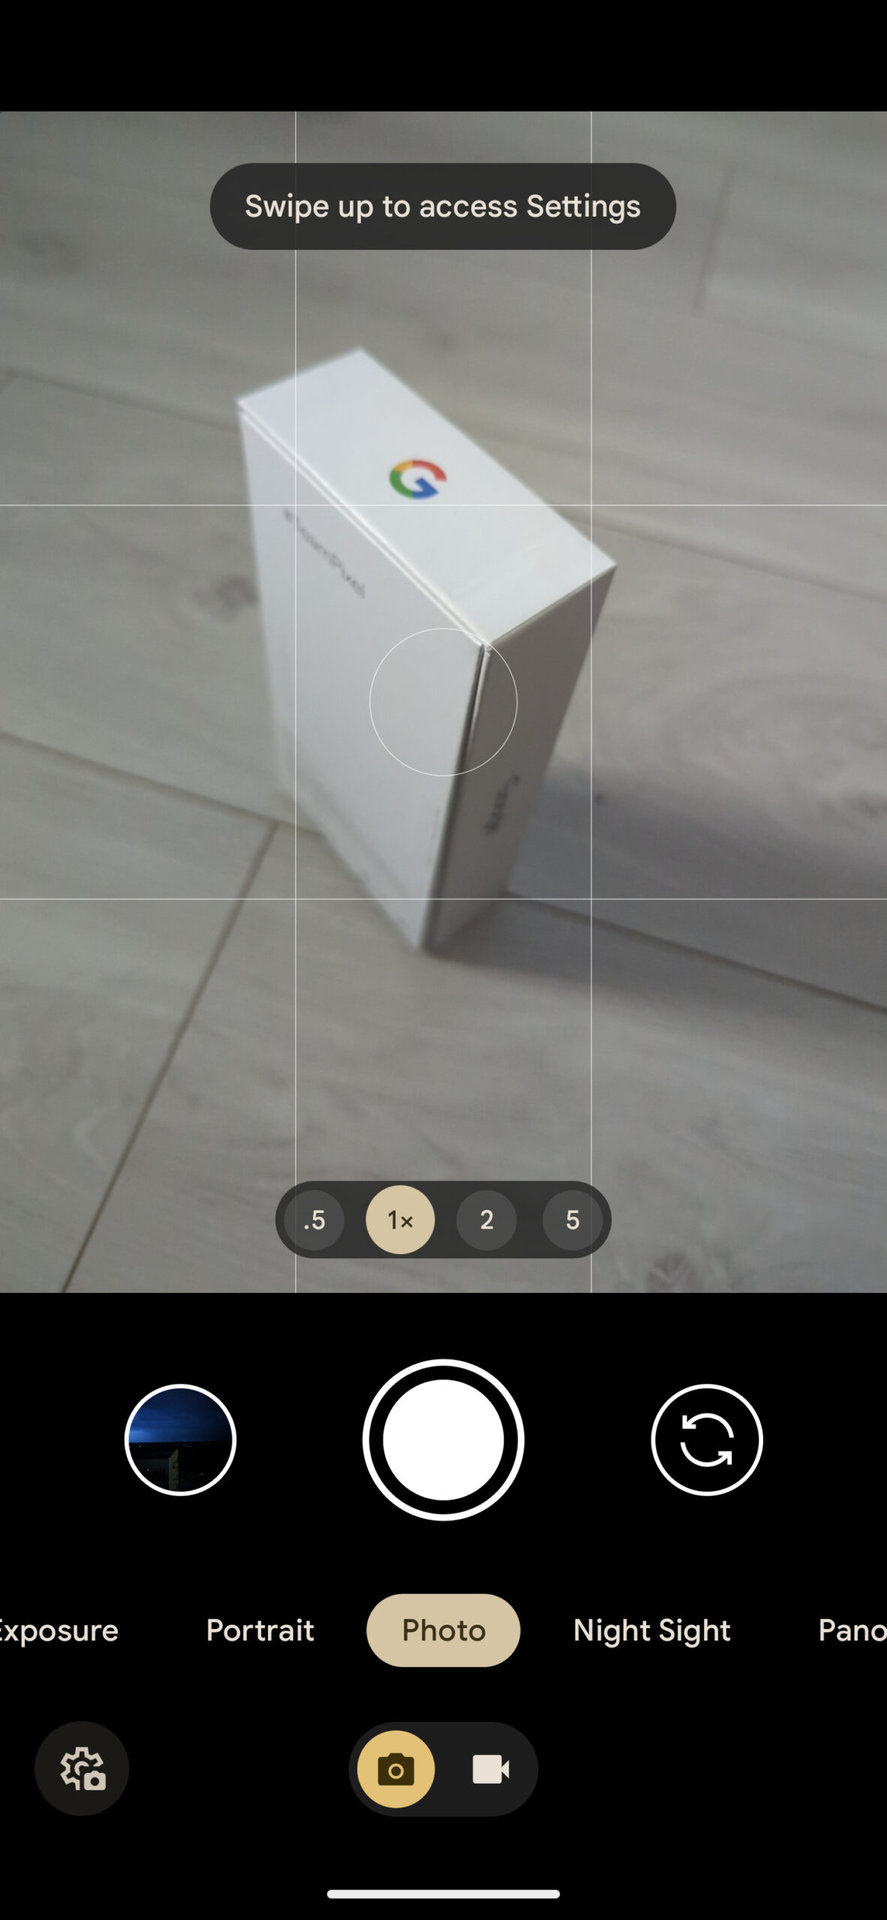 Google Camera 9 Screenshot 3 swipe up